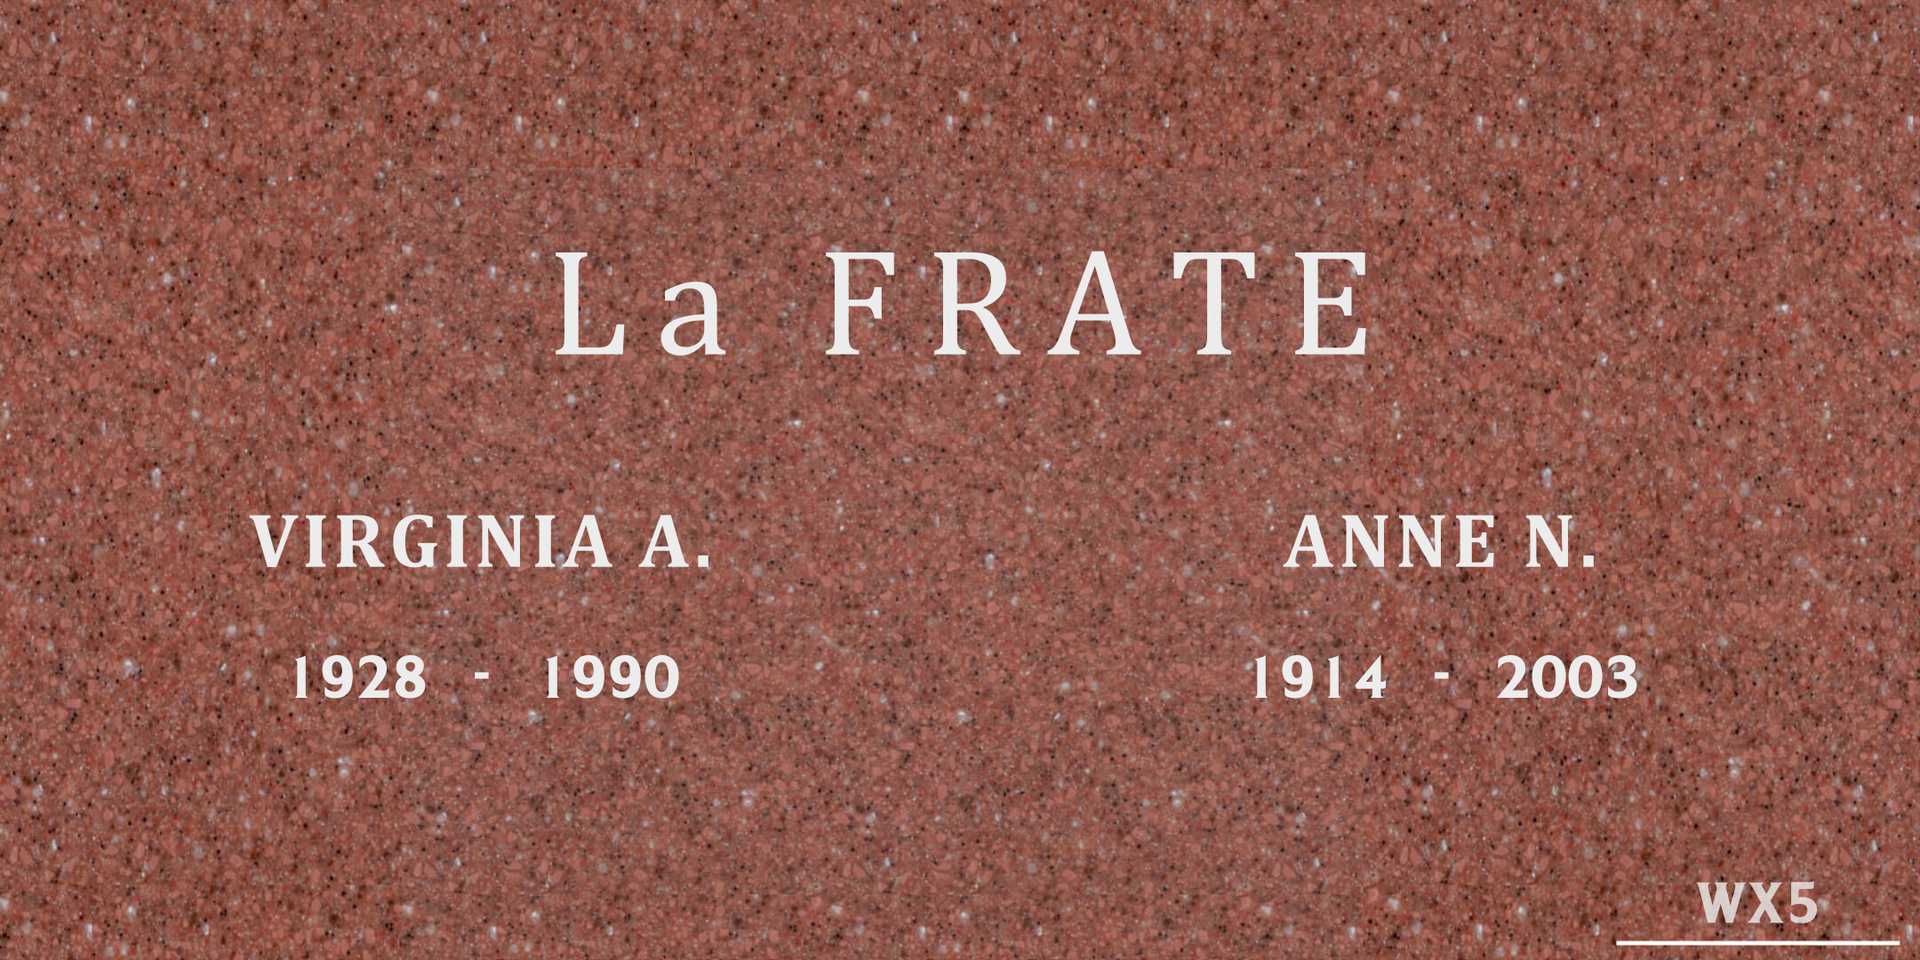 Virginia A. La Frate's grave